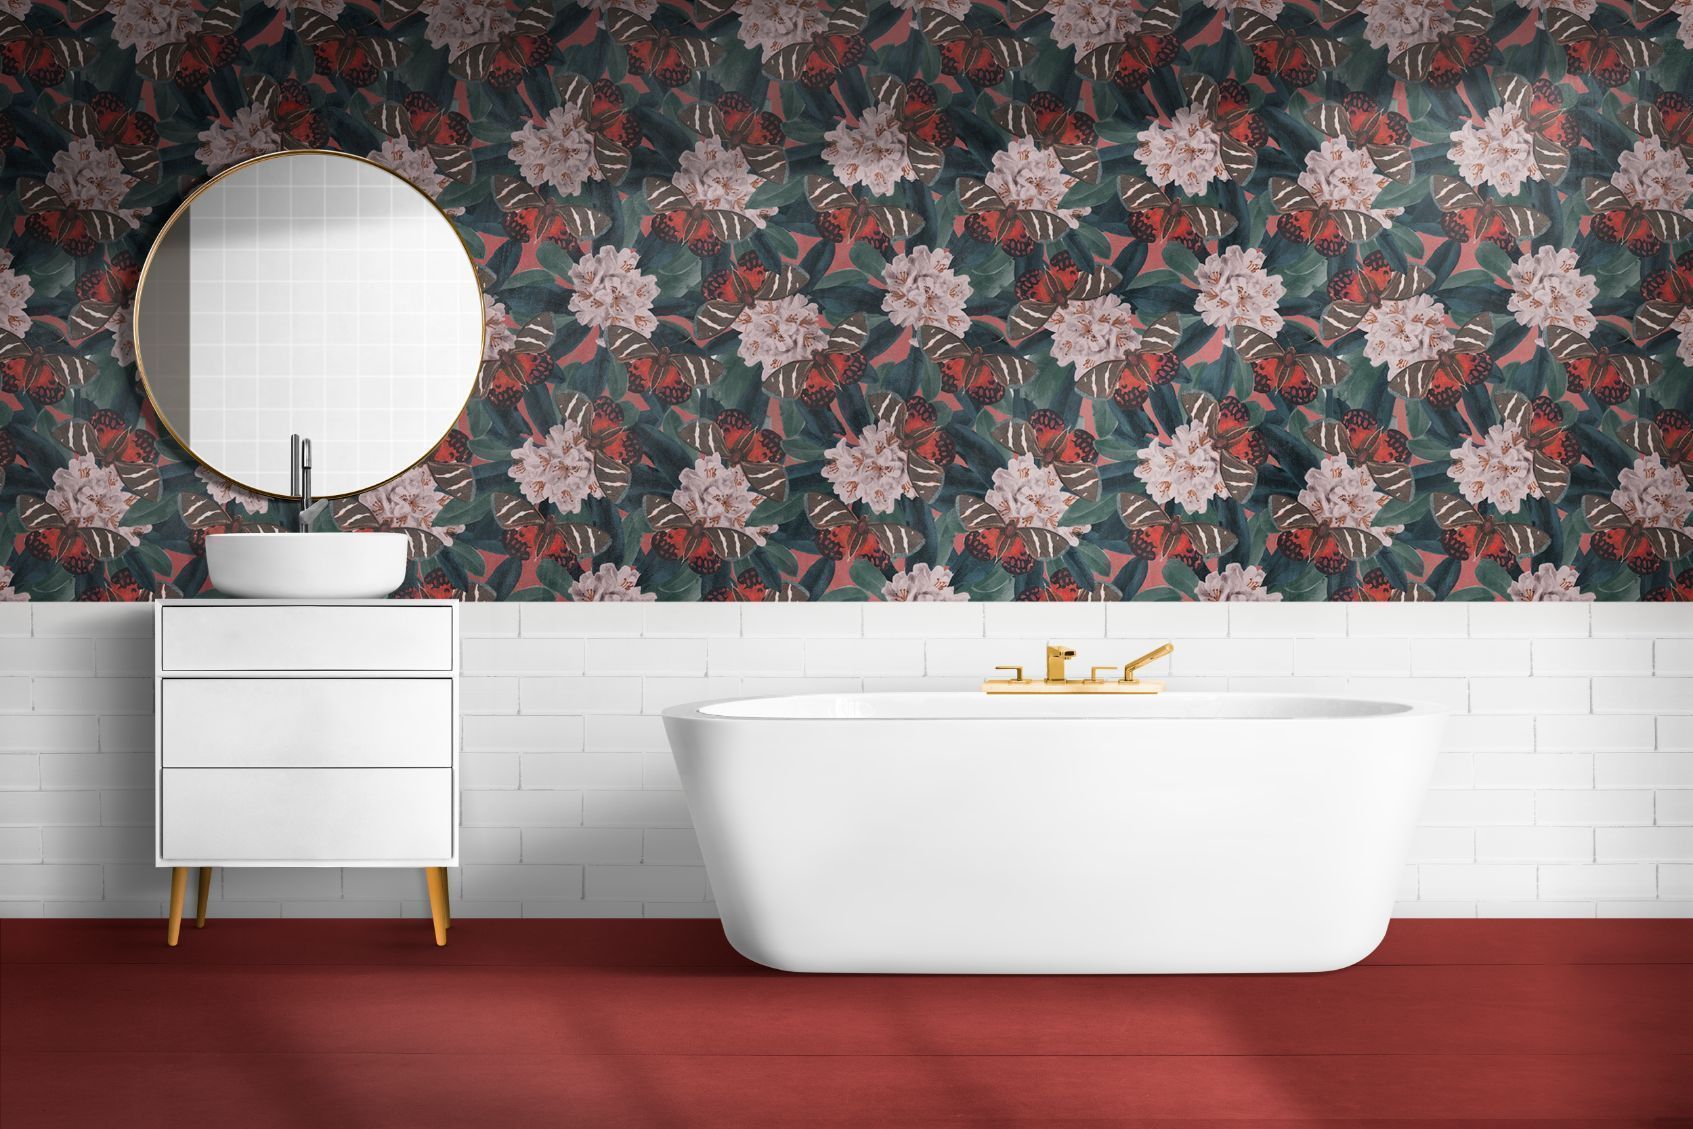 Wallpaper in the Bathroom? Yes, You Can! - Bob Vila